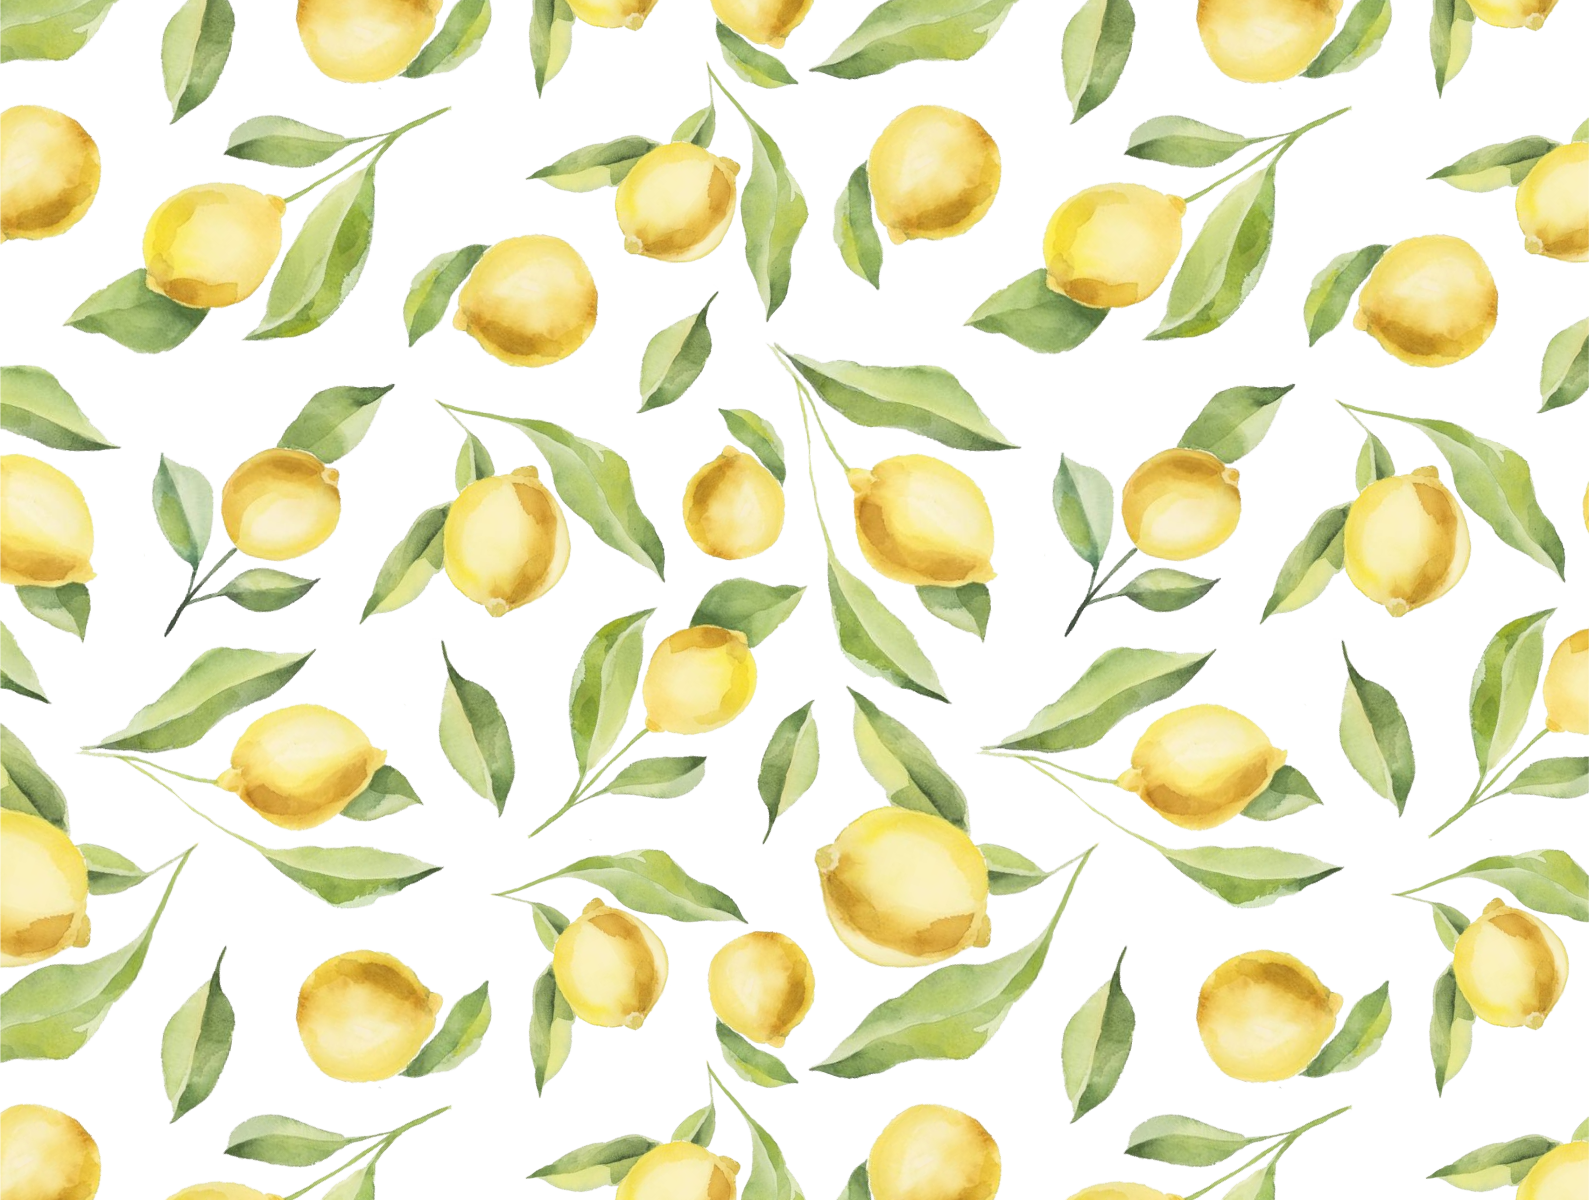 Lemon by Selina Hossain on Dribbble